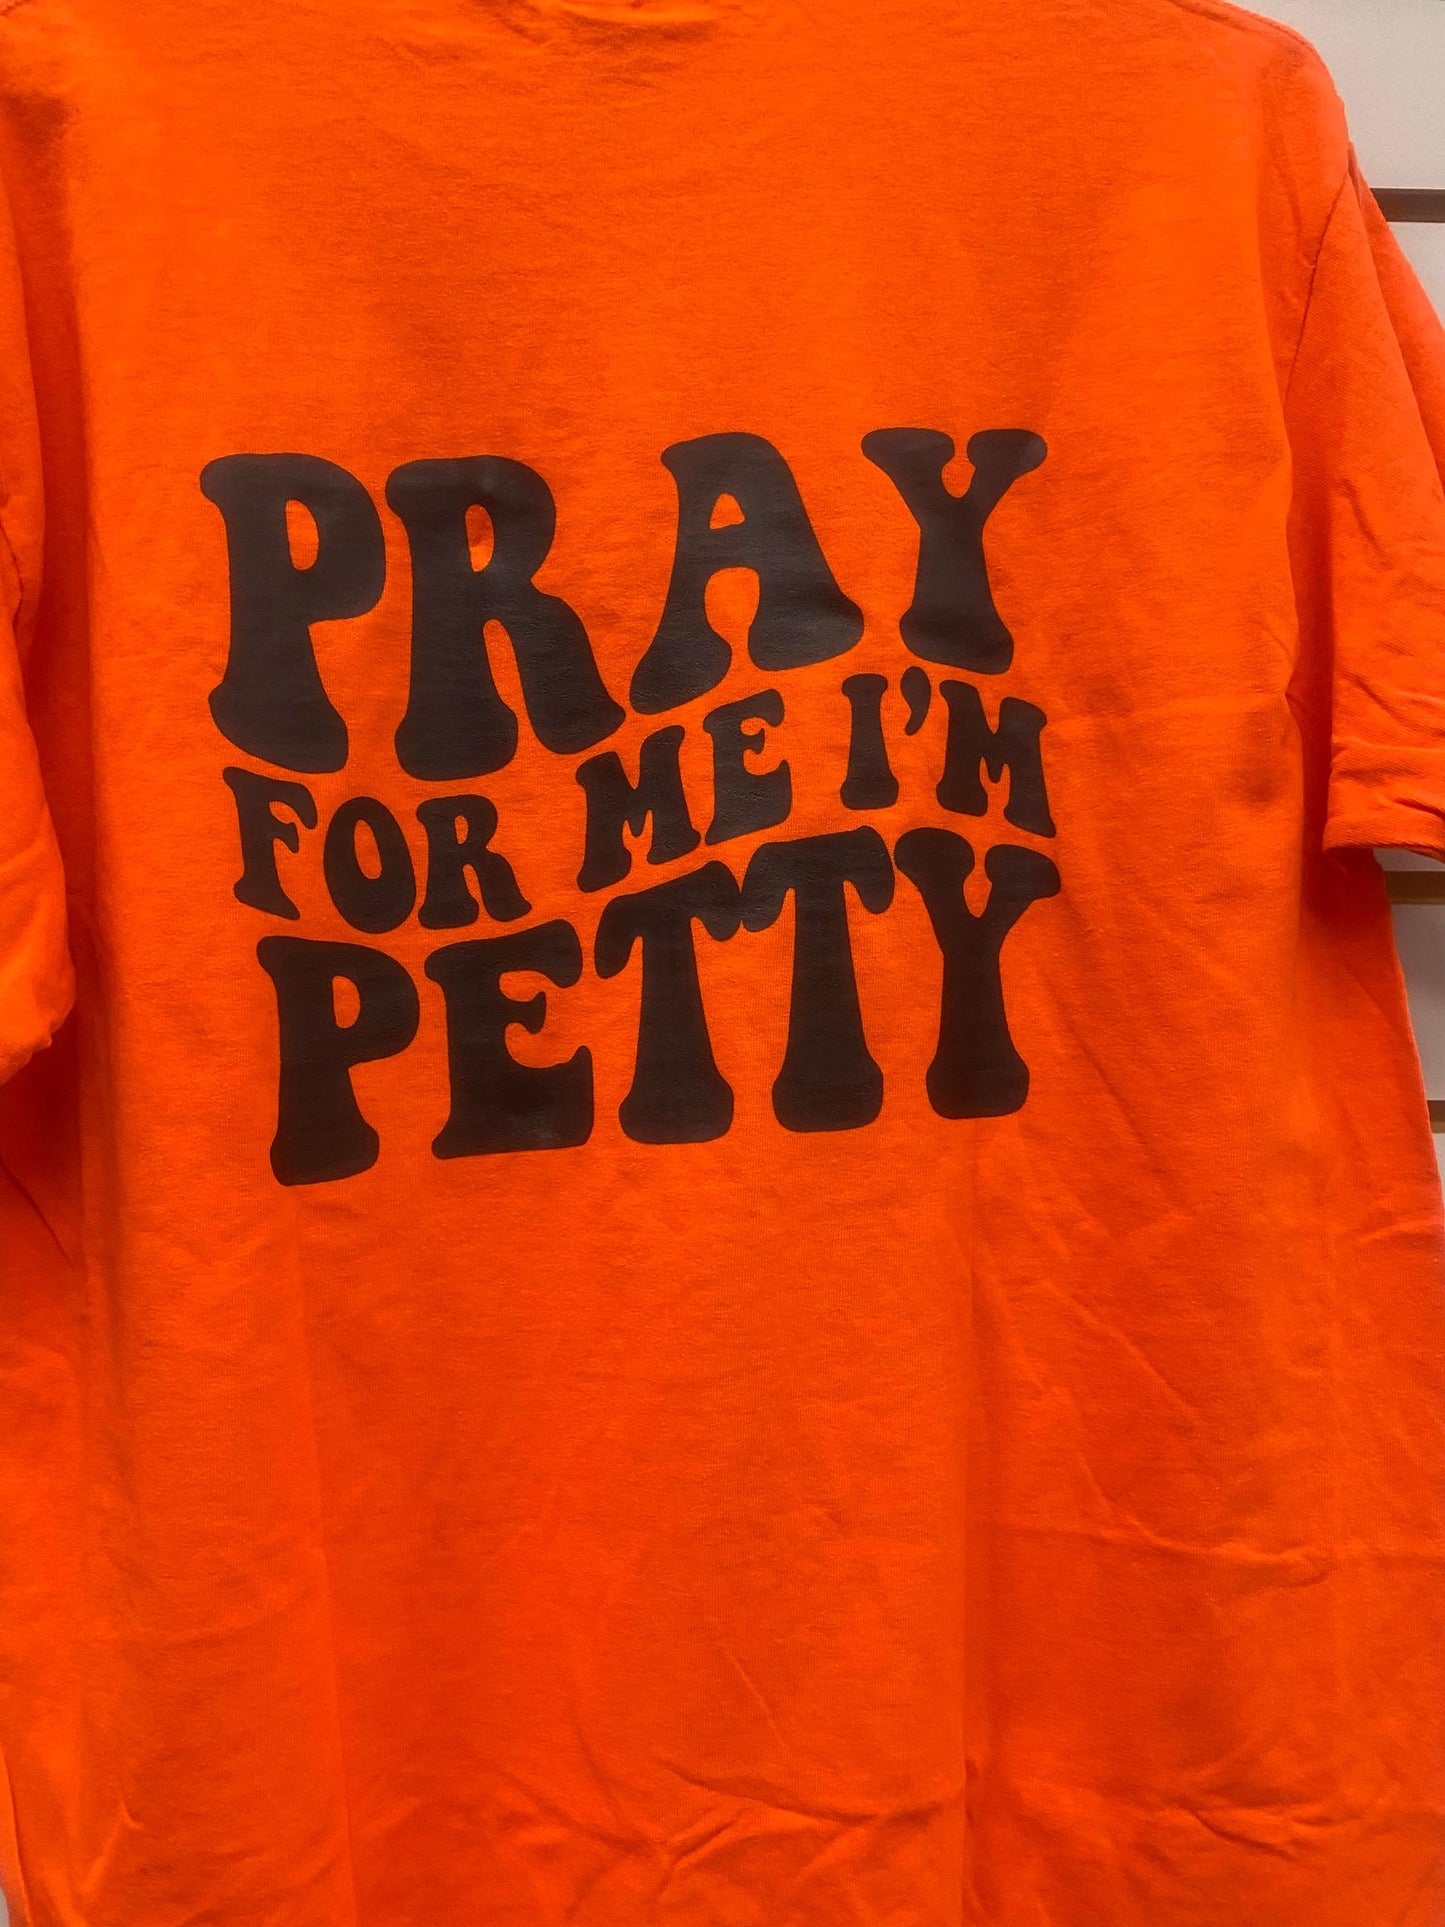 PRAY FOR ME IM PETTY